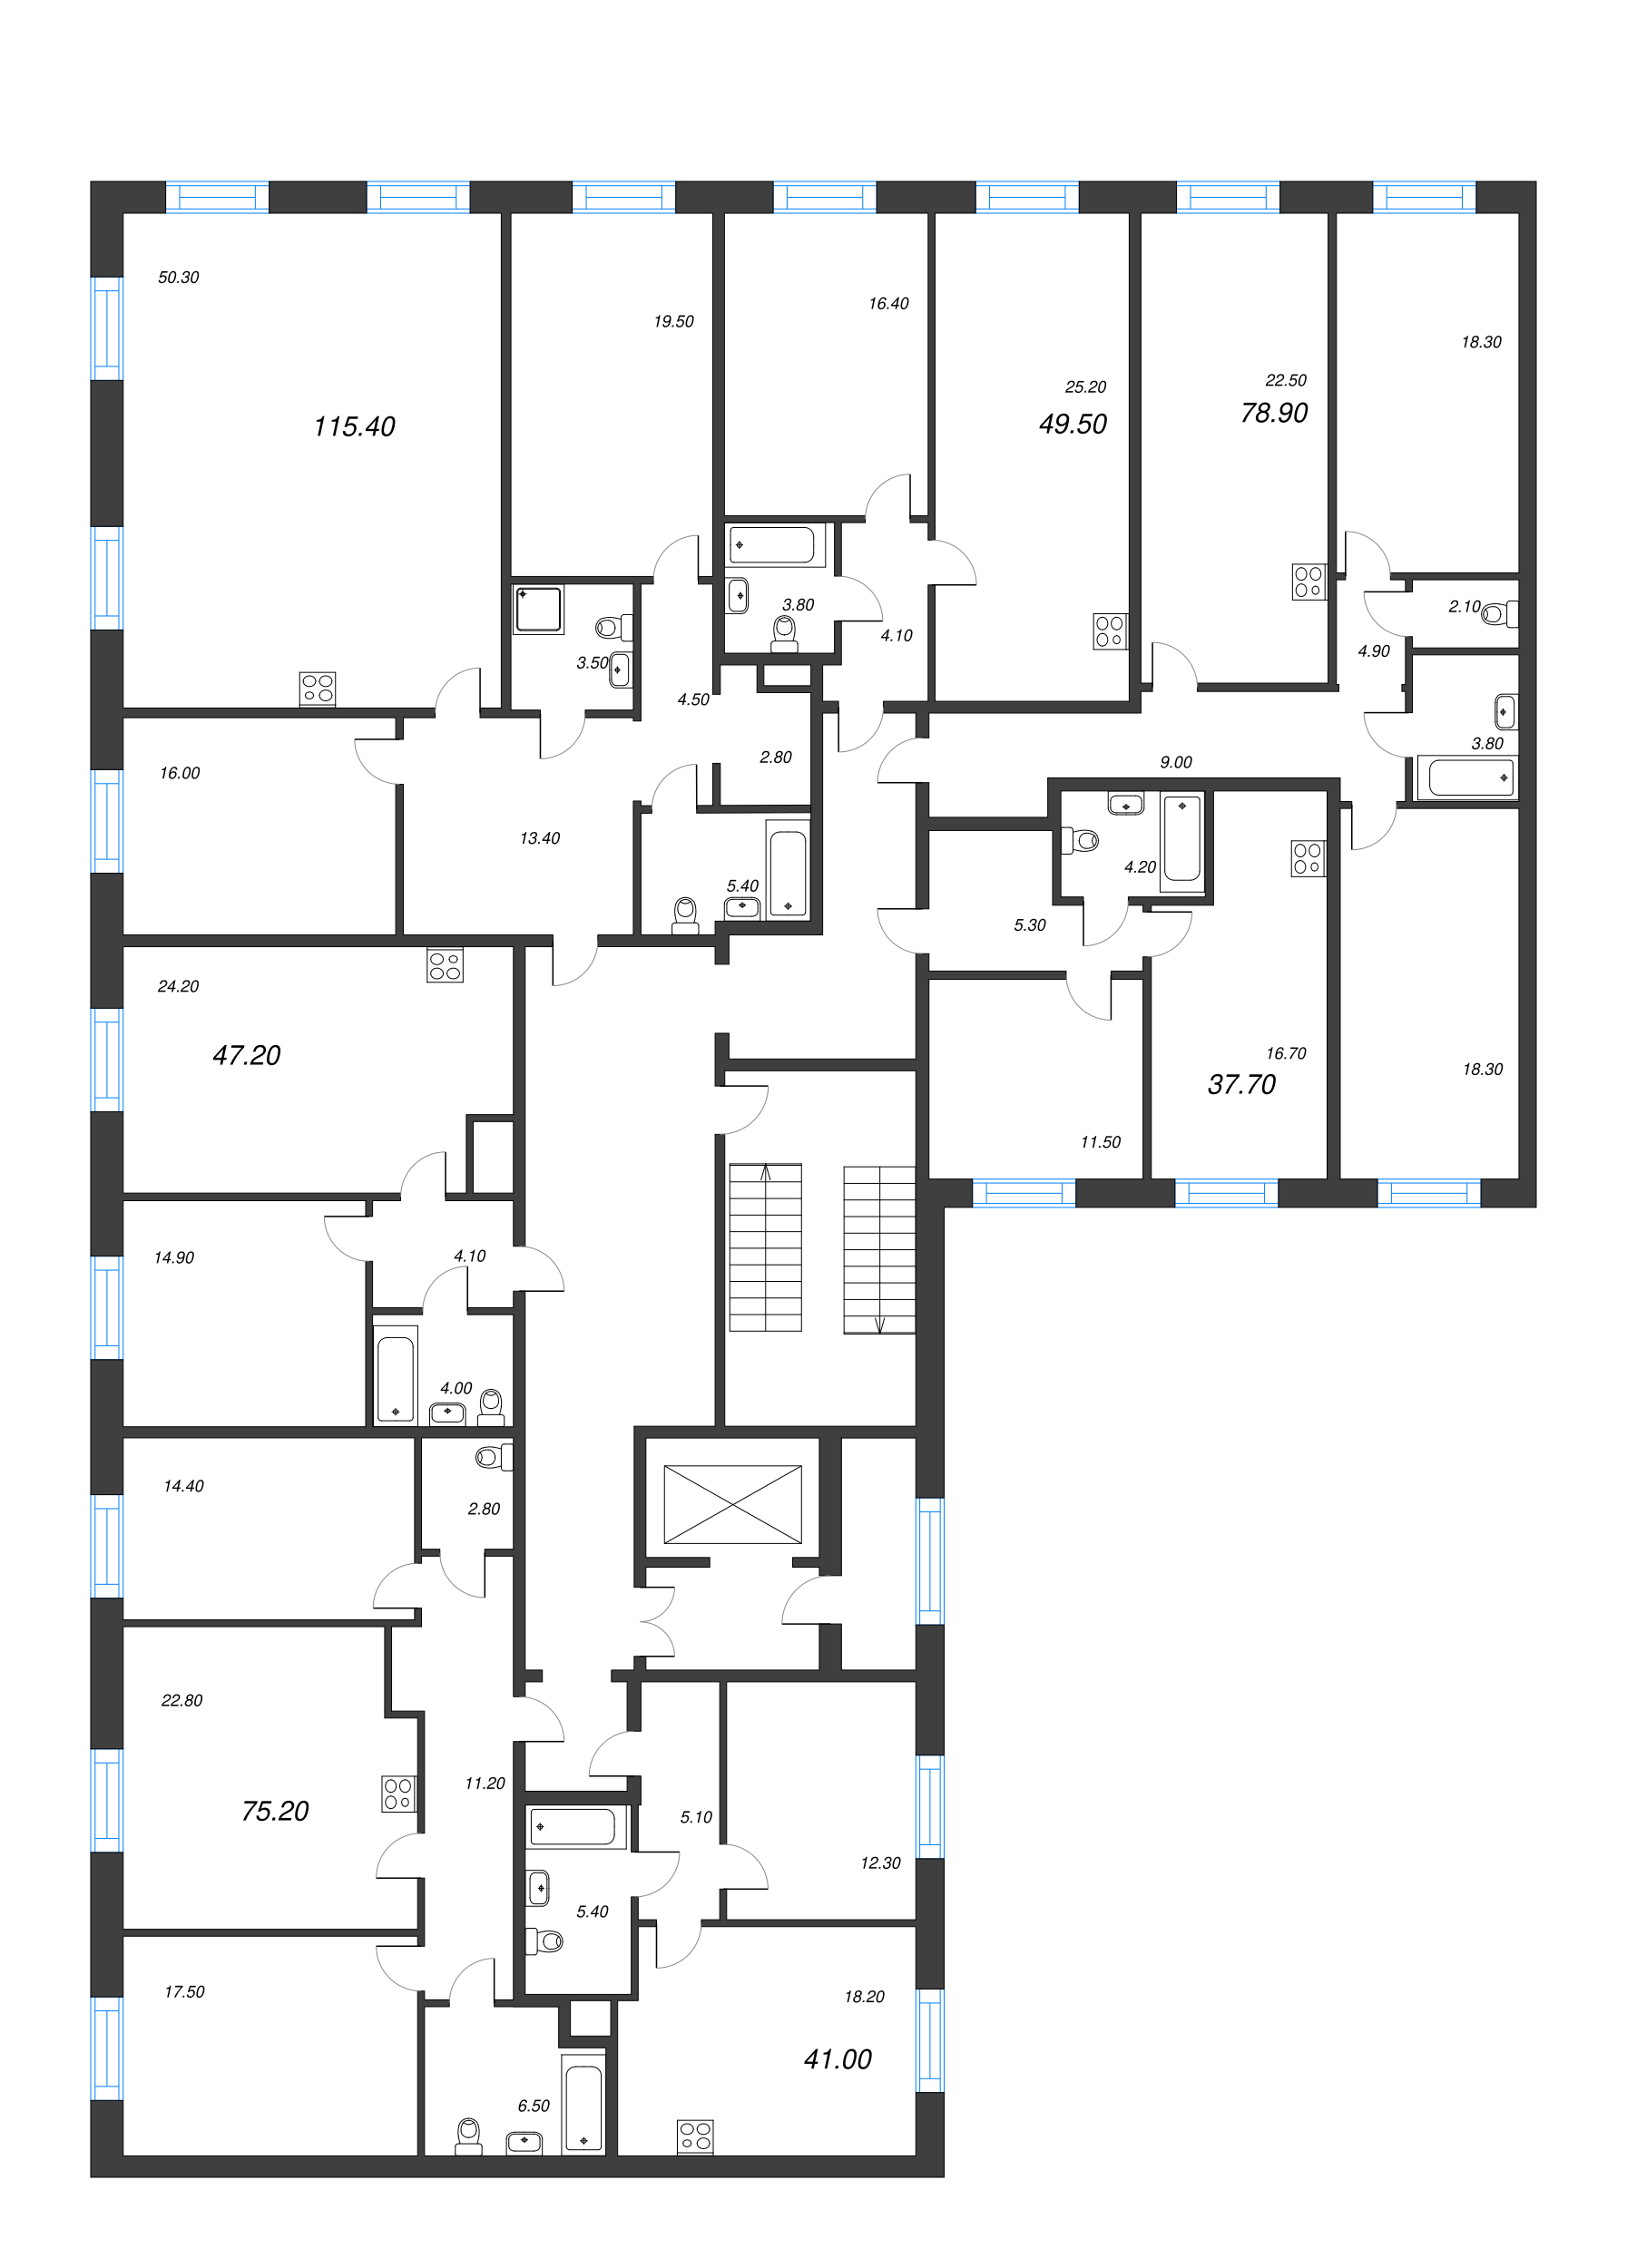 2-комнатная (Евро) квартира, 49.6 м² - планировка этажа